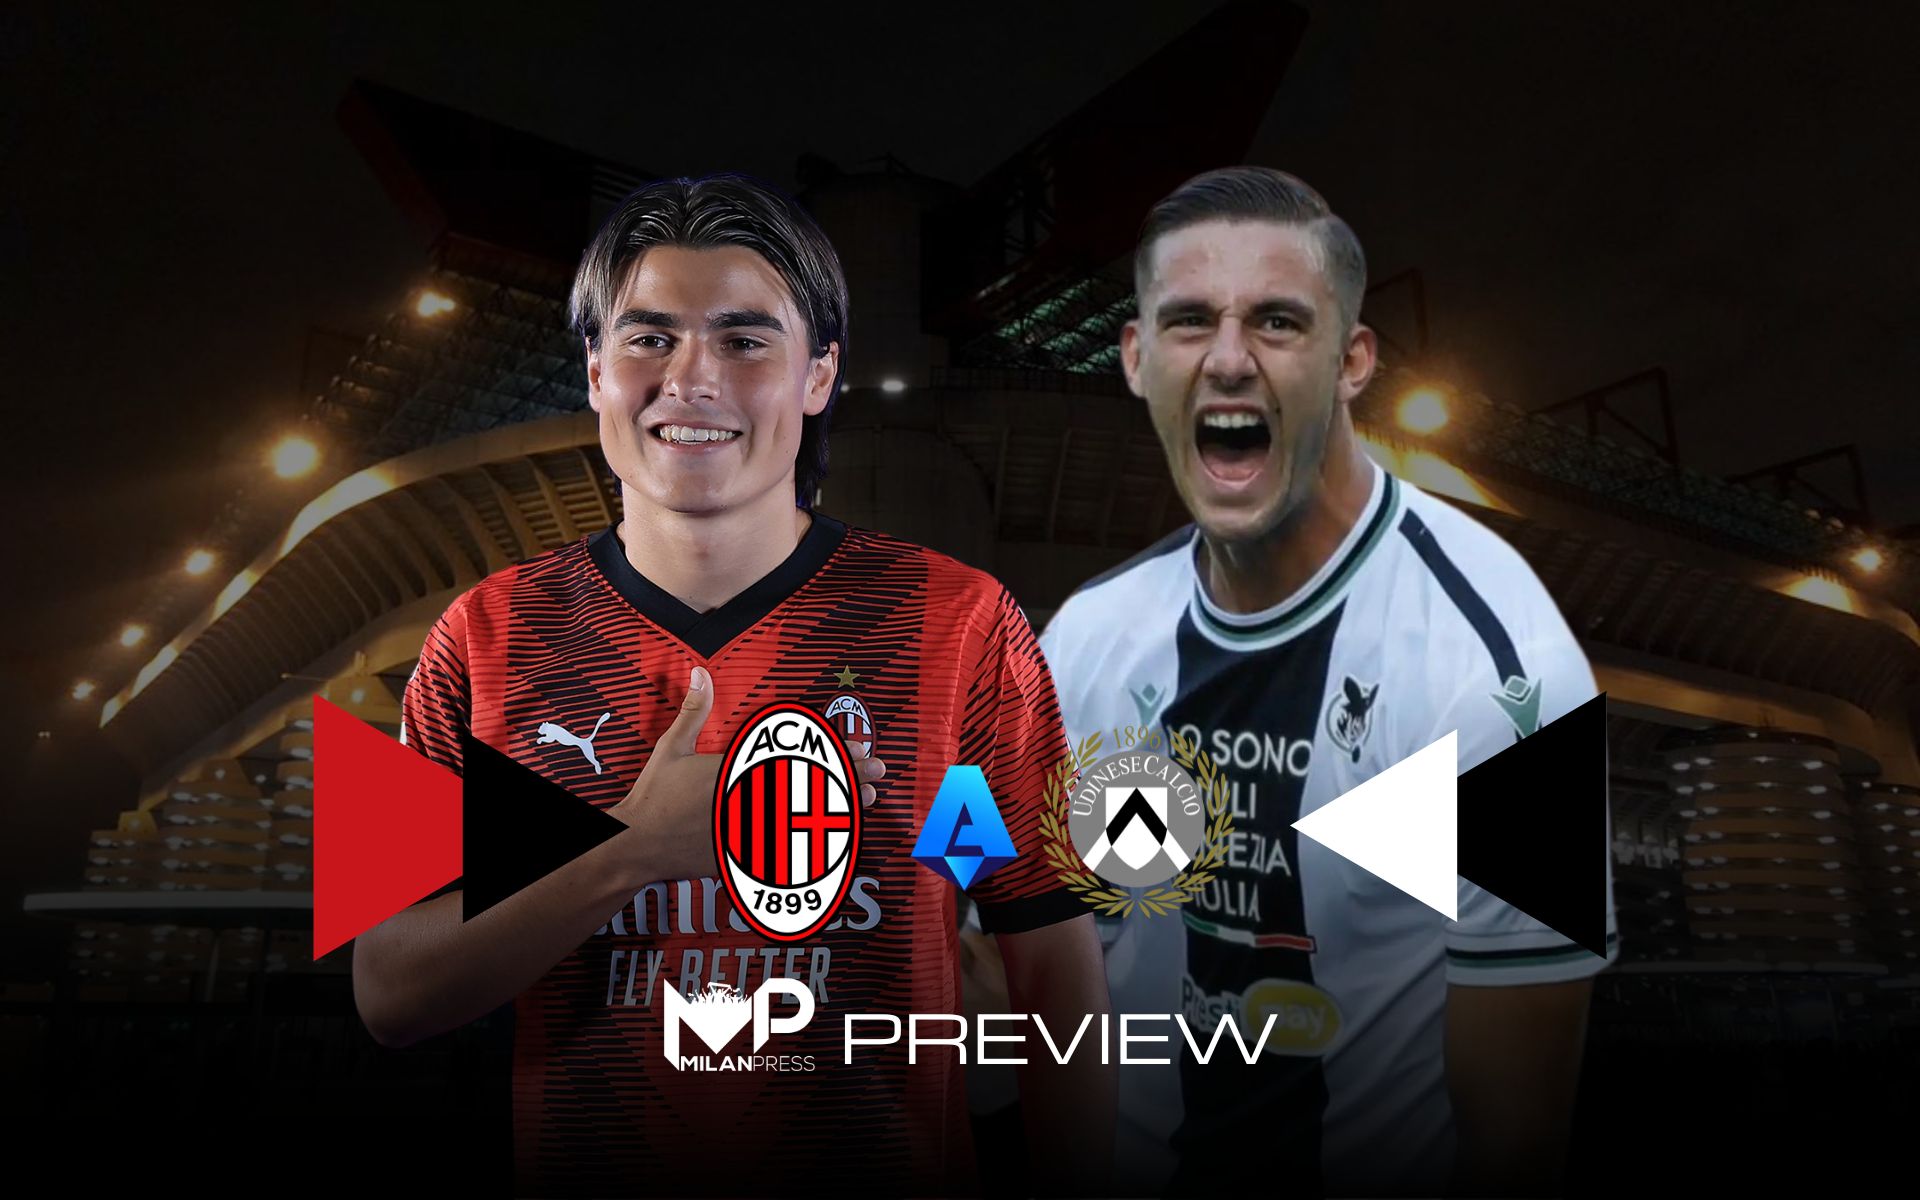 Milan-Udinese Preview - MilanPress, robe dell'altro diavolo